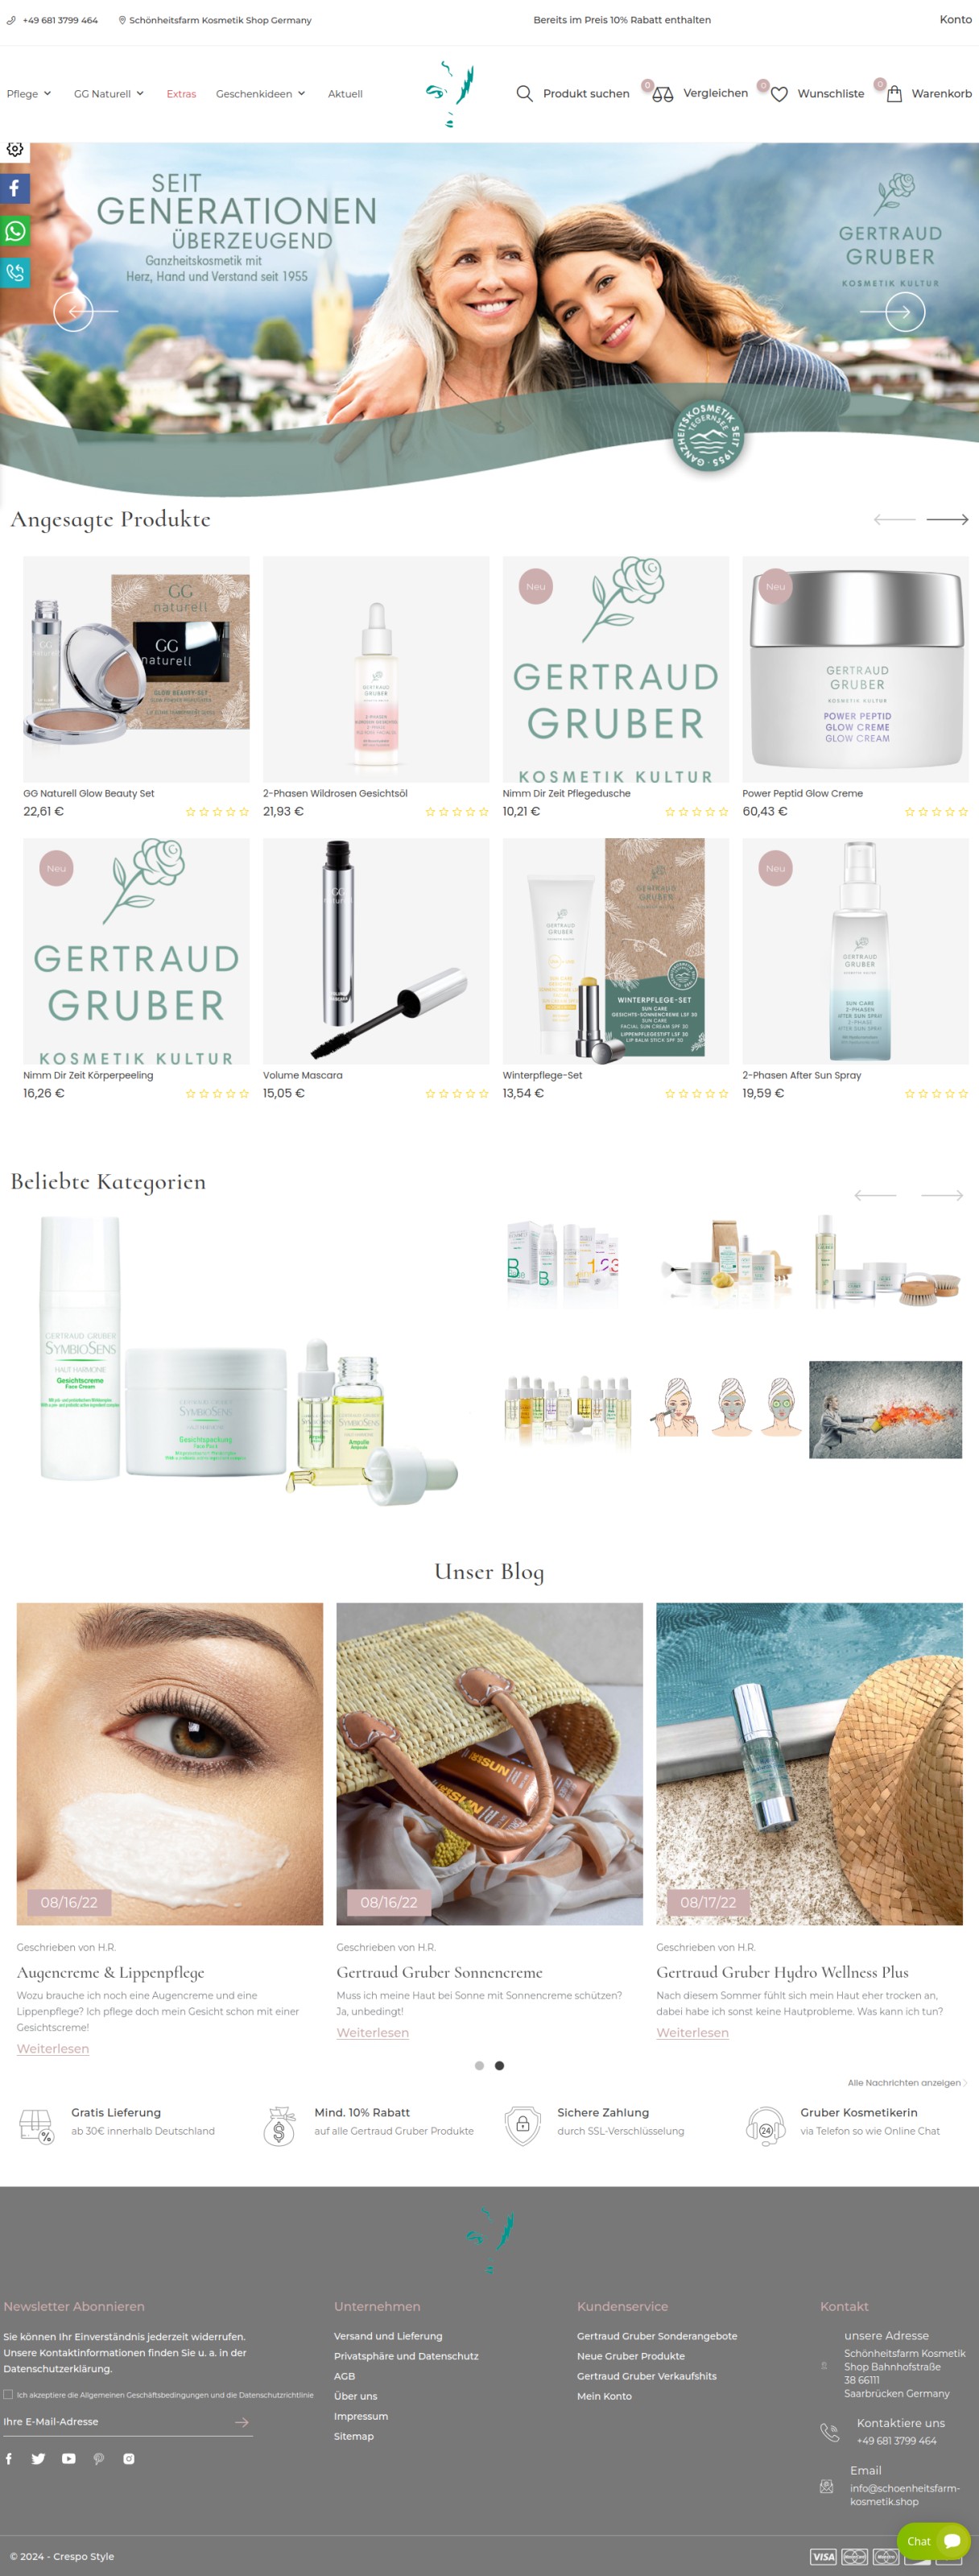 Gertraud Gruber Kosmetik Produkte Online Shop